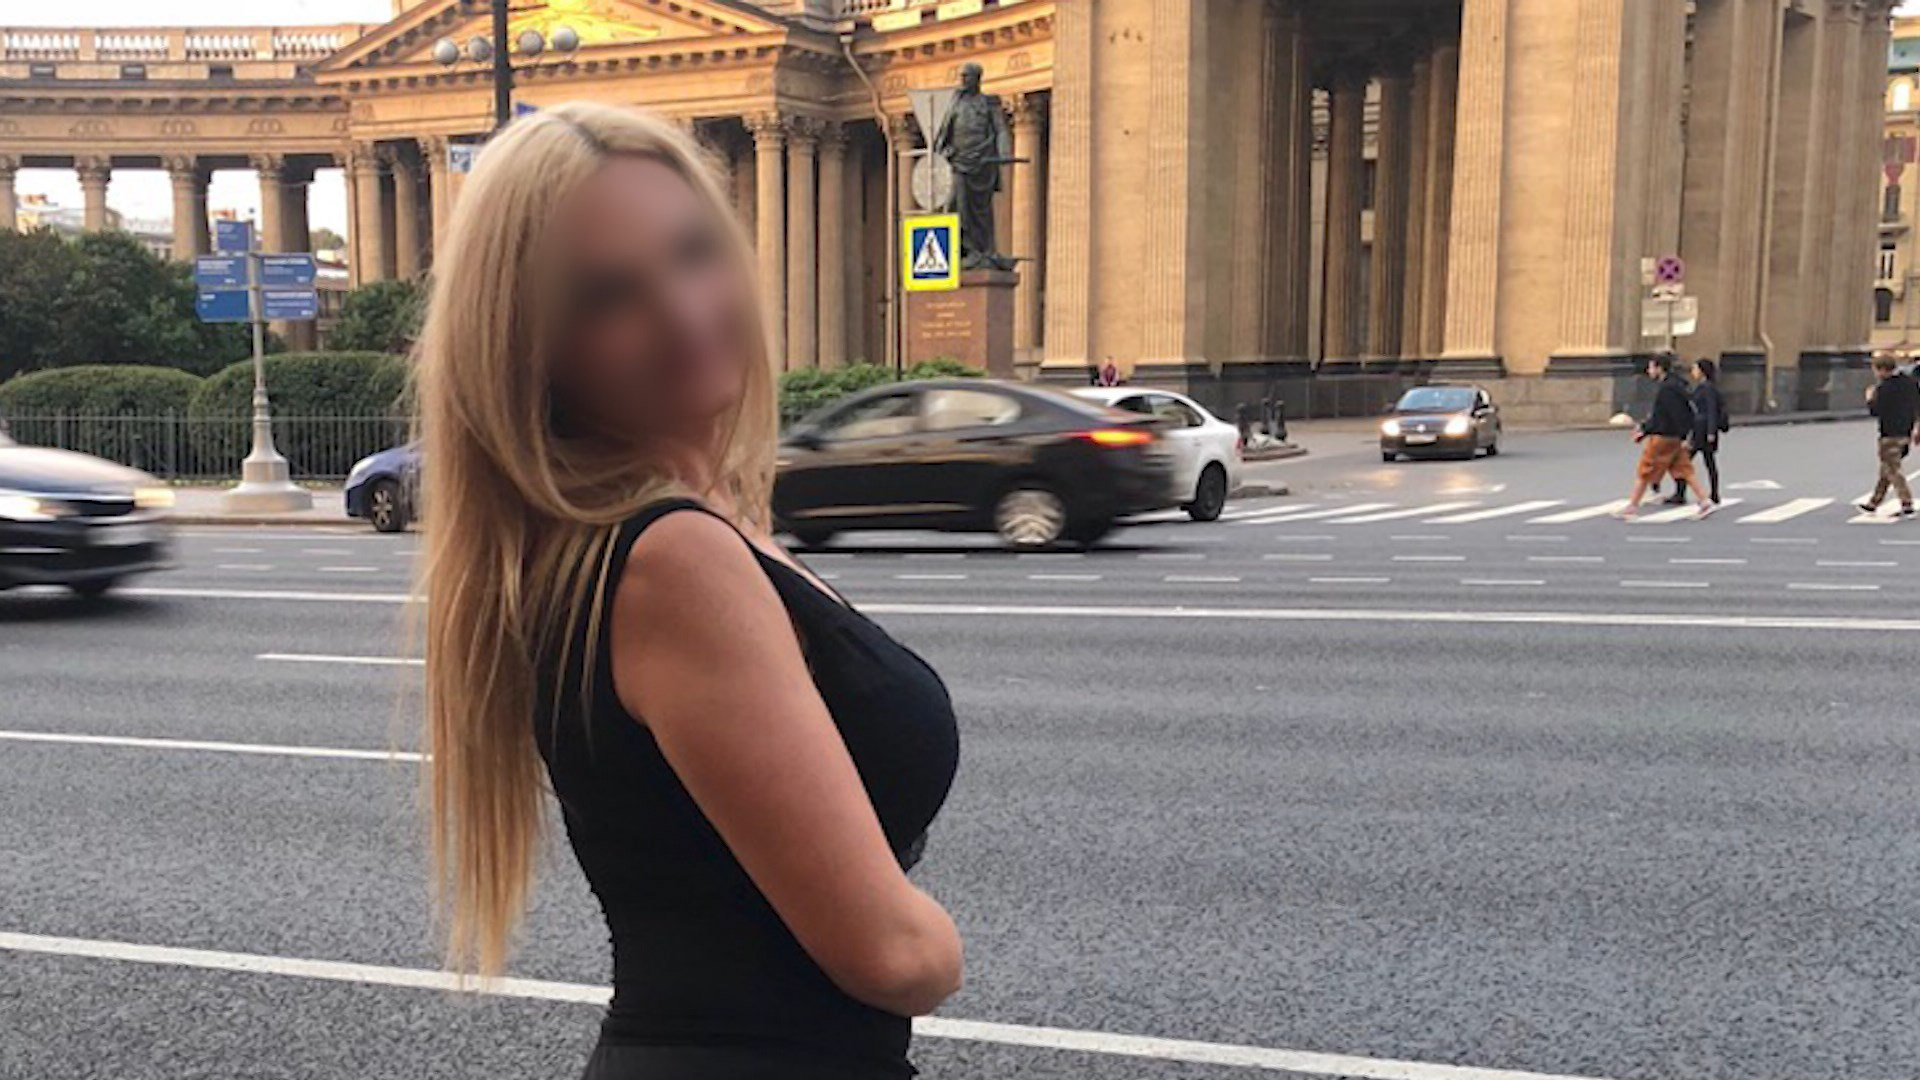 Телеканал санкт петербург эфир. Женщина показала грудь водителю в Санкт-Петербурге. Женщины Санкт-Петербурга фото грудей. Показала грудь Санкт Петербург. В Питере женщина оголила грудь.